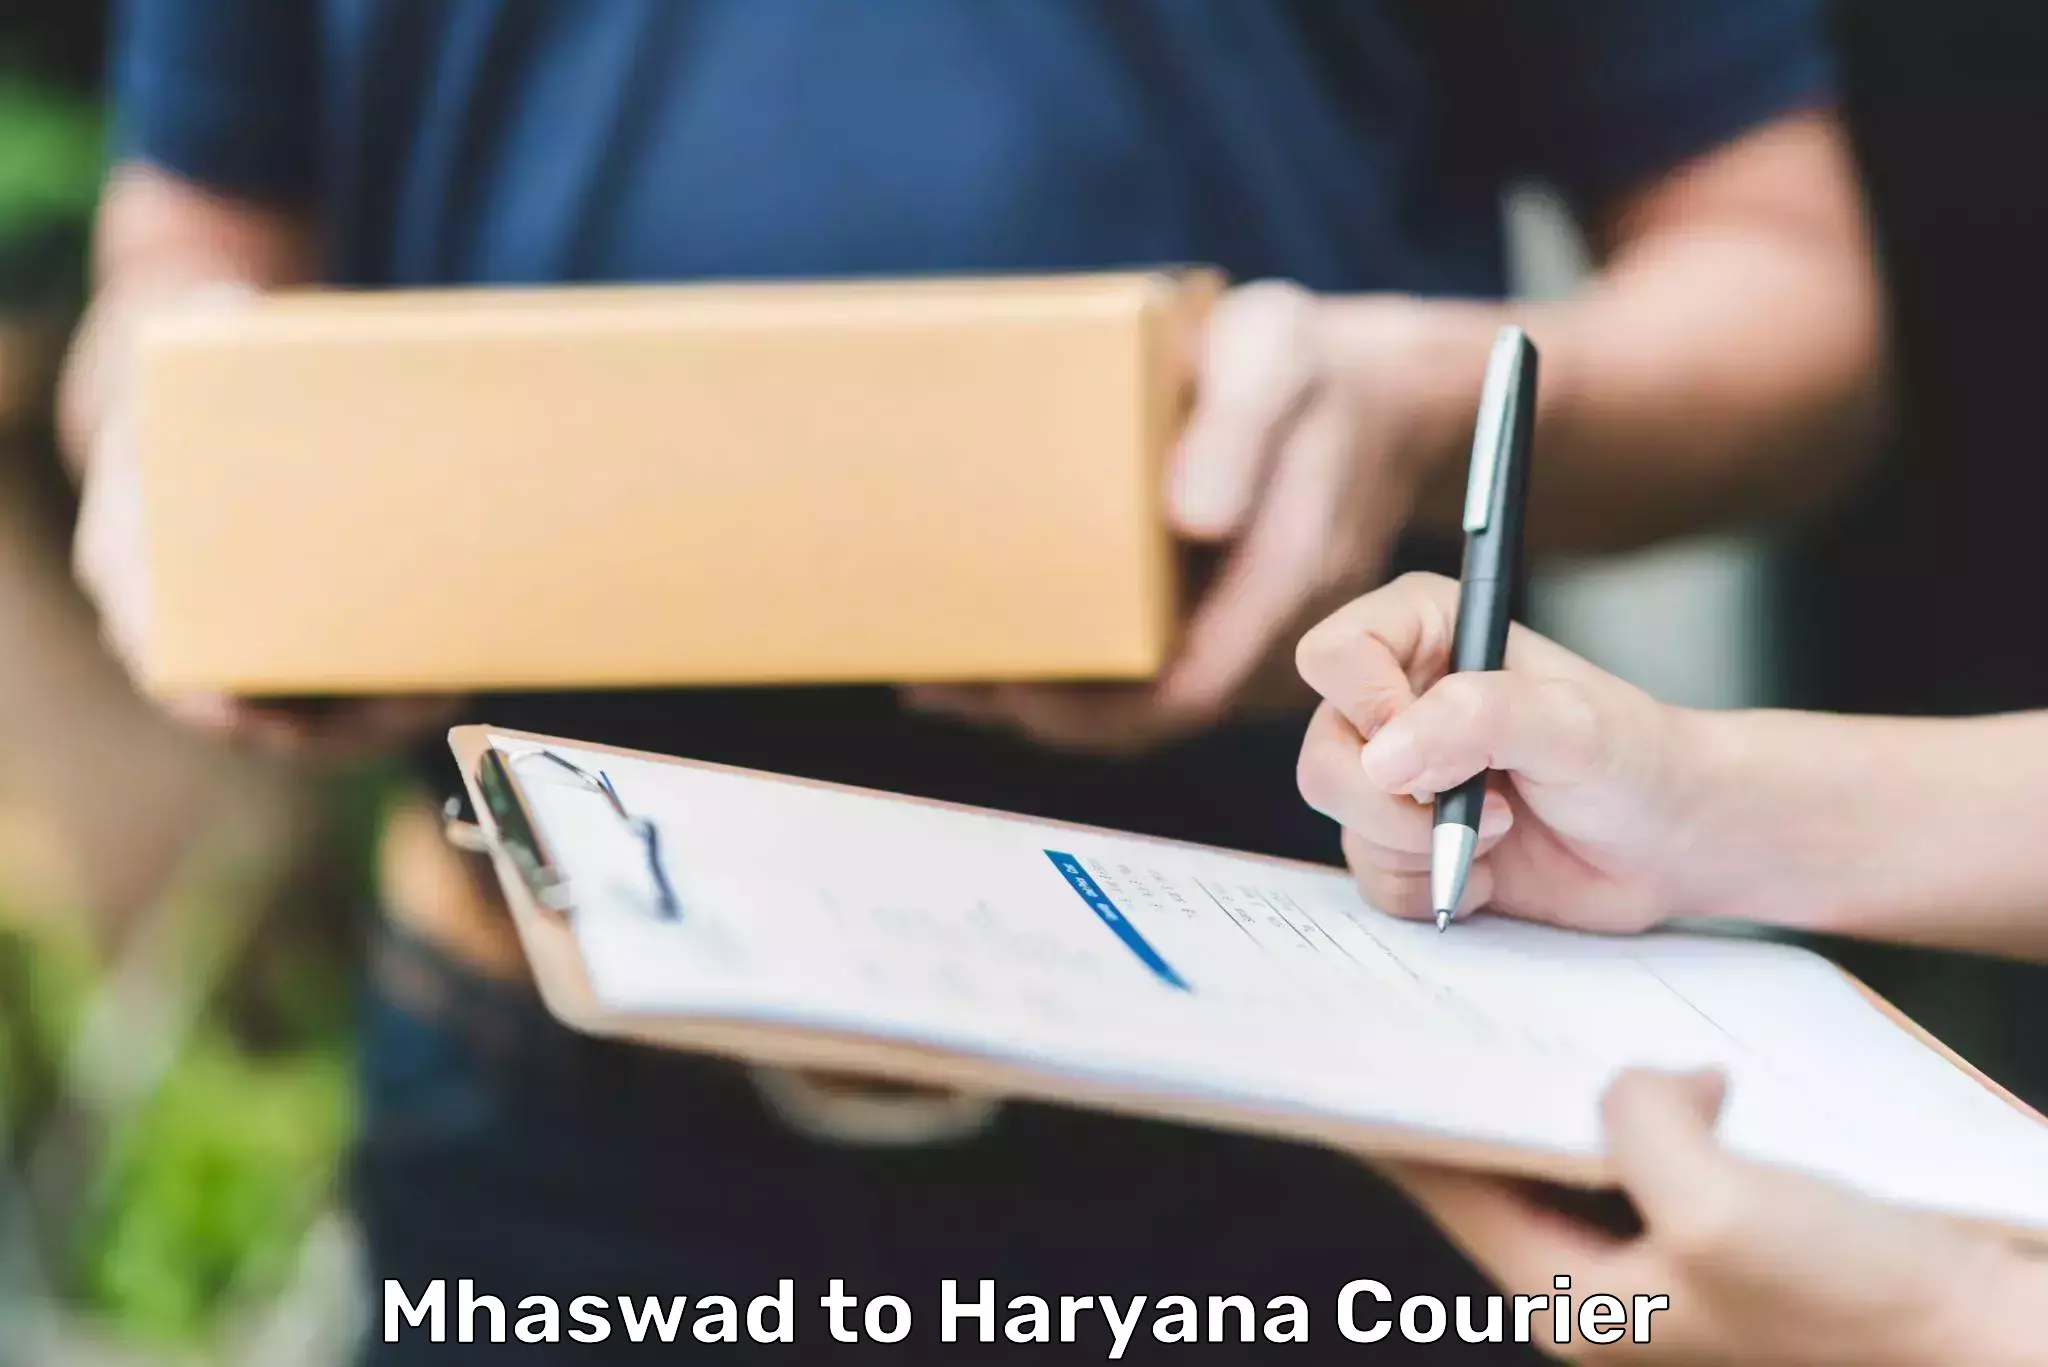 Bulk courier orders Mhaswad to Bilaspur Haryana